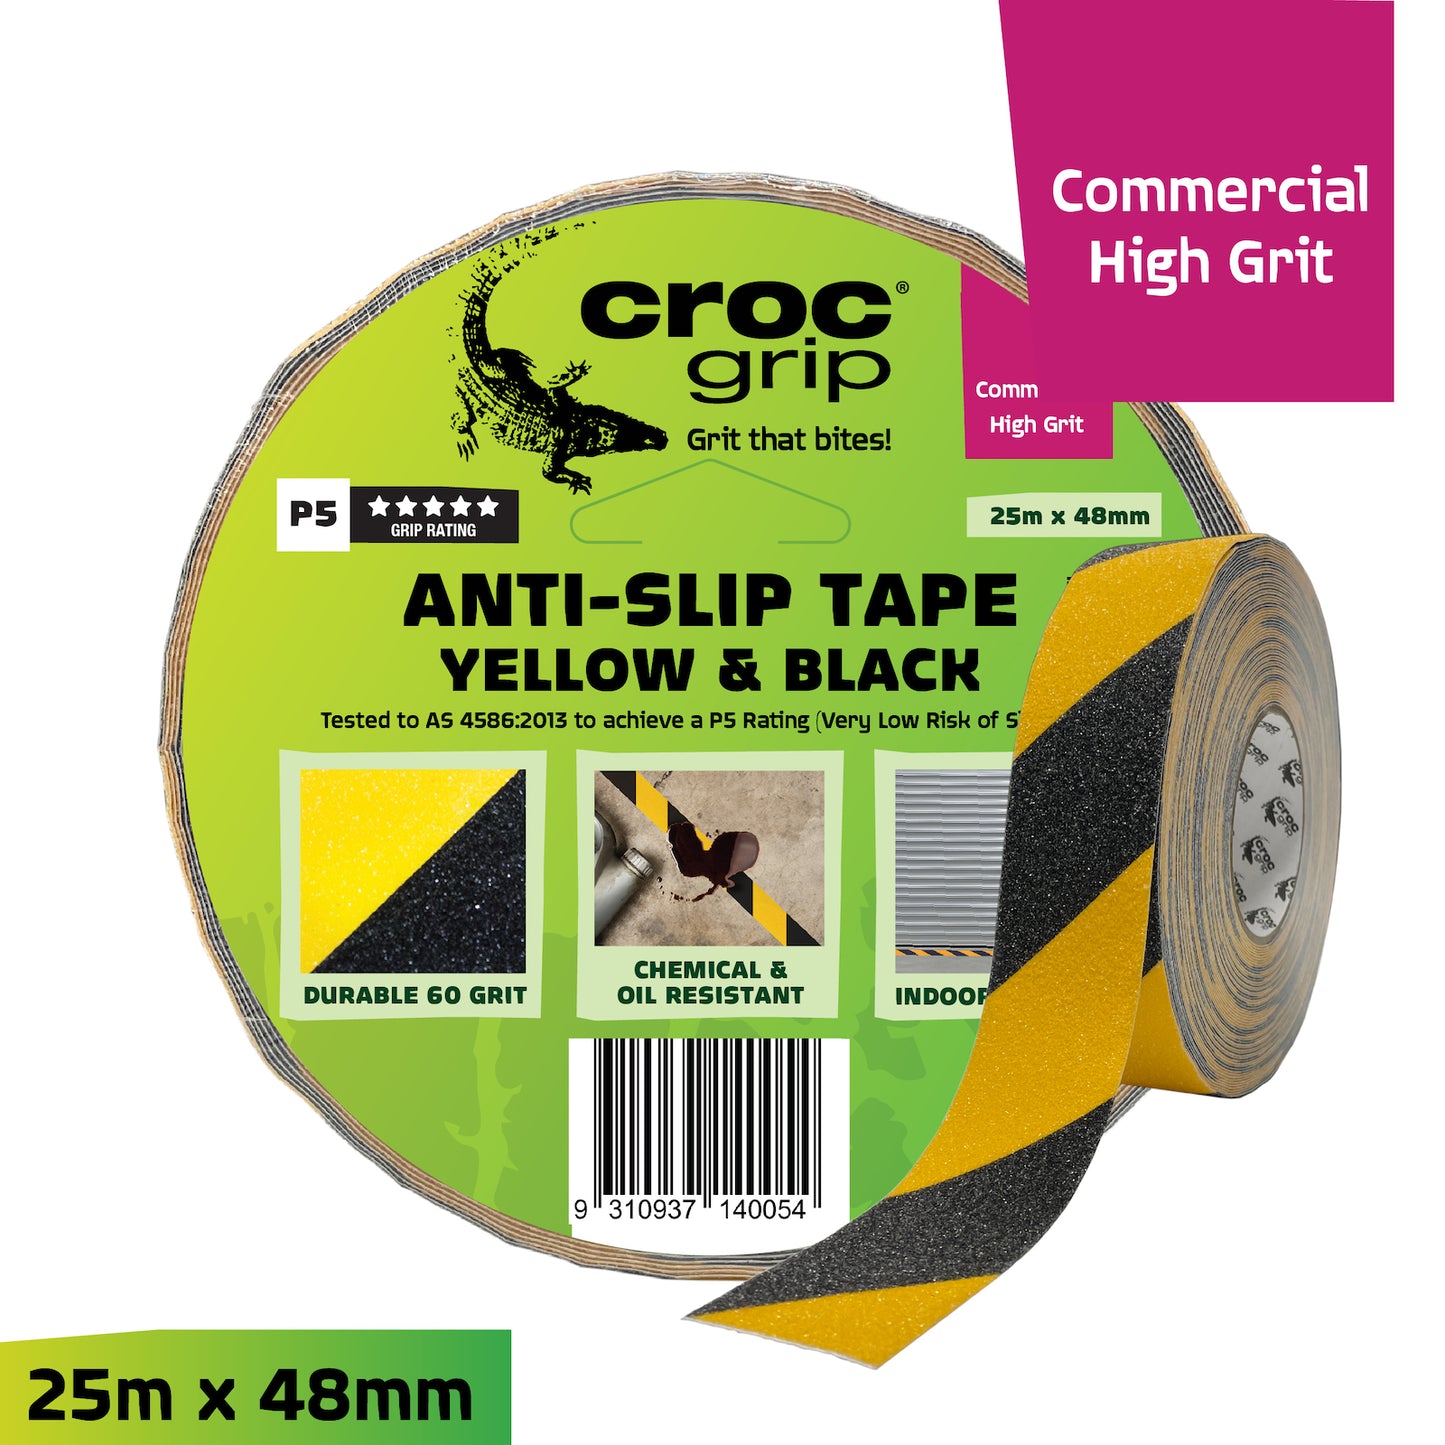 25M x 48MM Yellow/Black Commercial High Grit Anti-Slip Tape